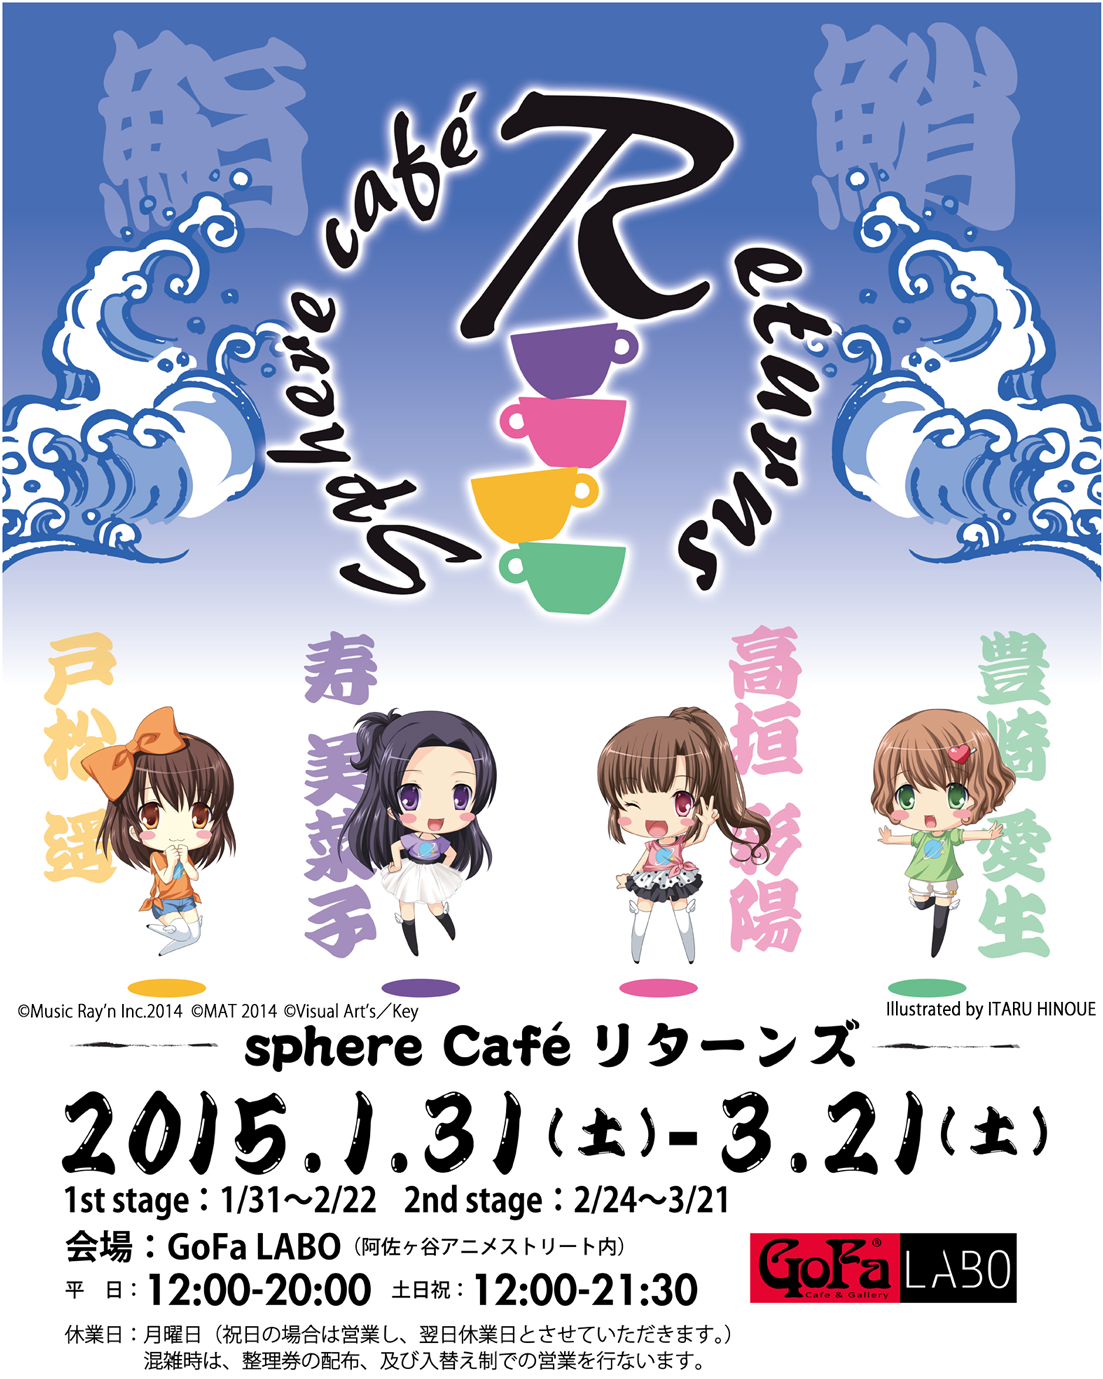 Sphere Cafe Returns